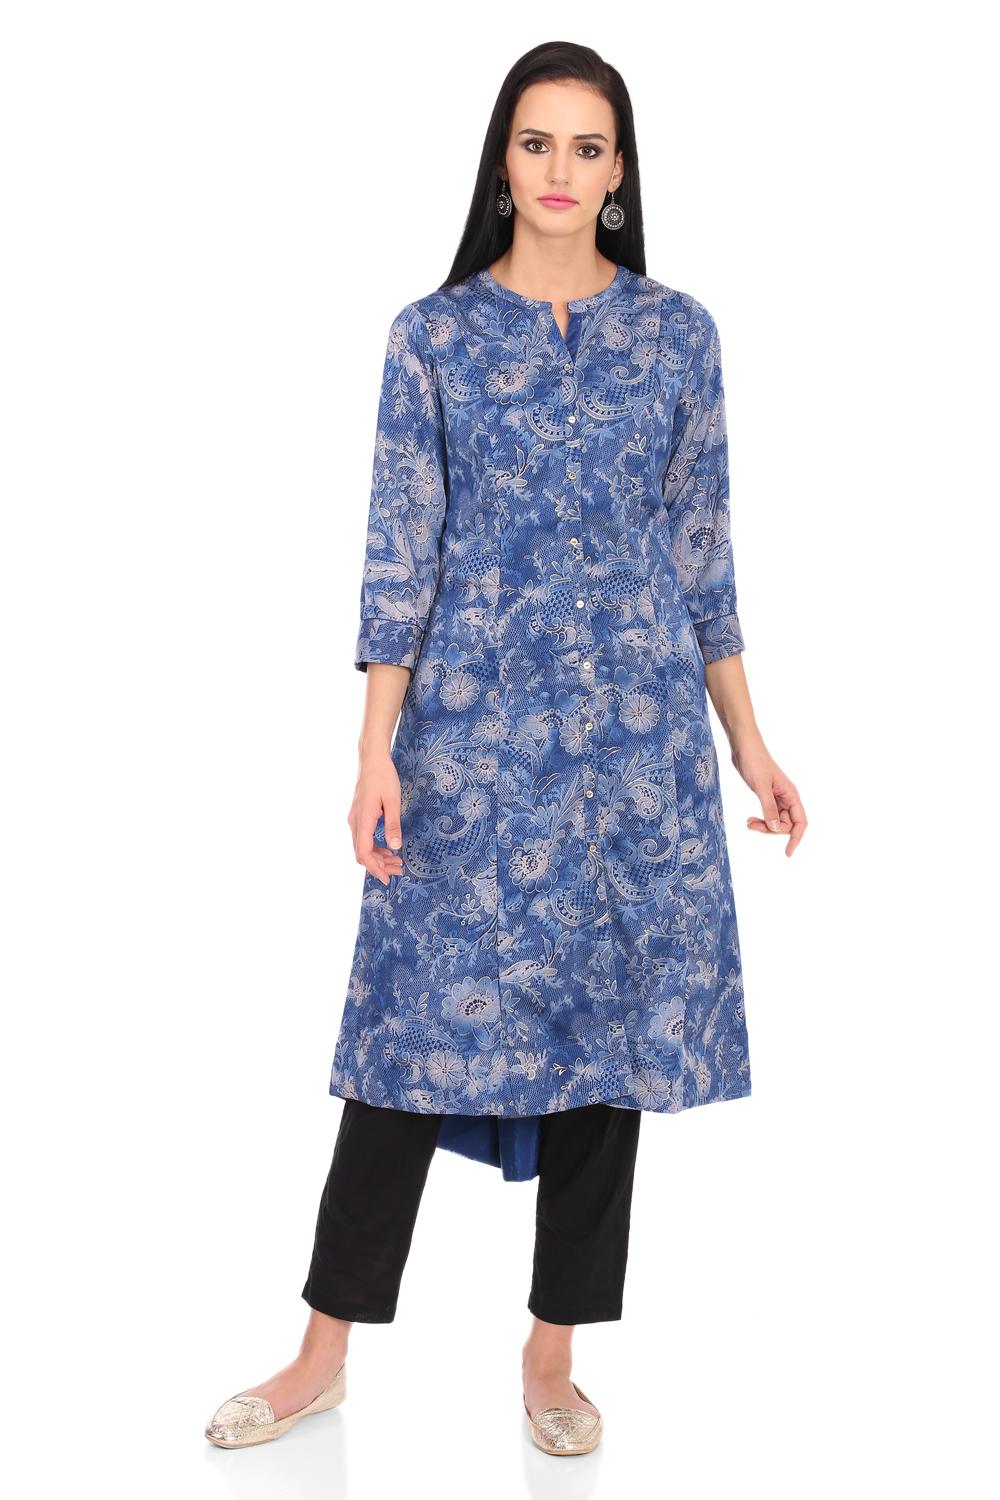 Buy Online Blue A-Line Art Silk Kurta for Women & Girls at Best Prices ...